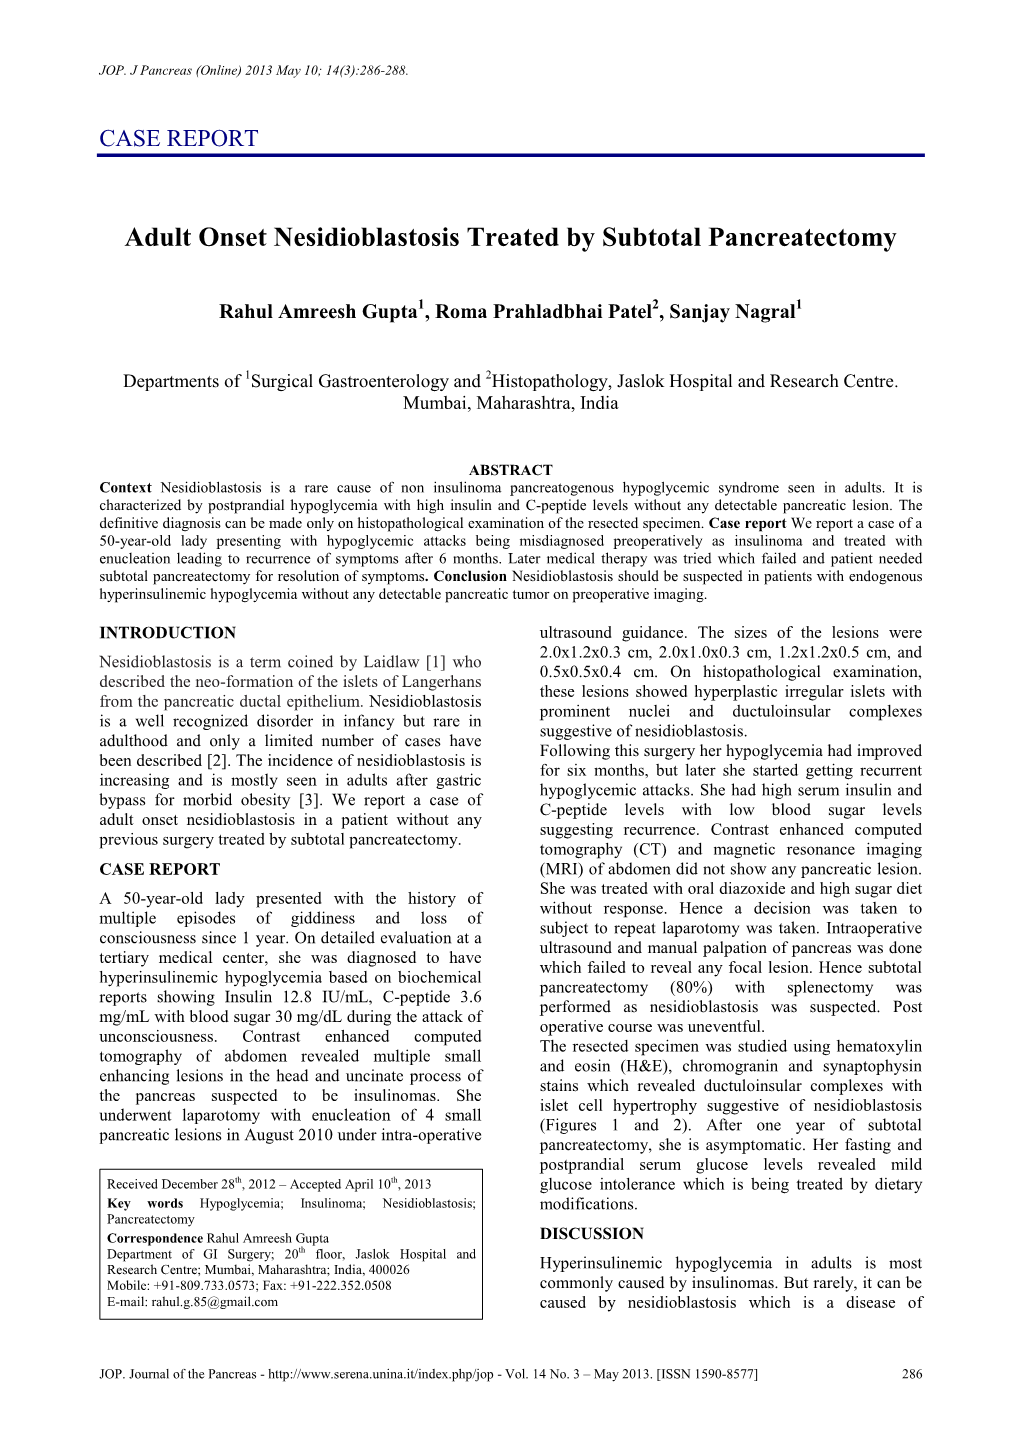 Adult Onset Nesidioblastosis Treated by Subtotal Pancreatectomy